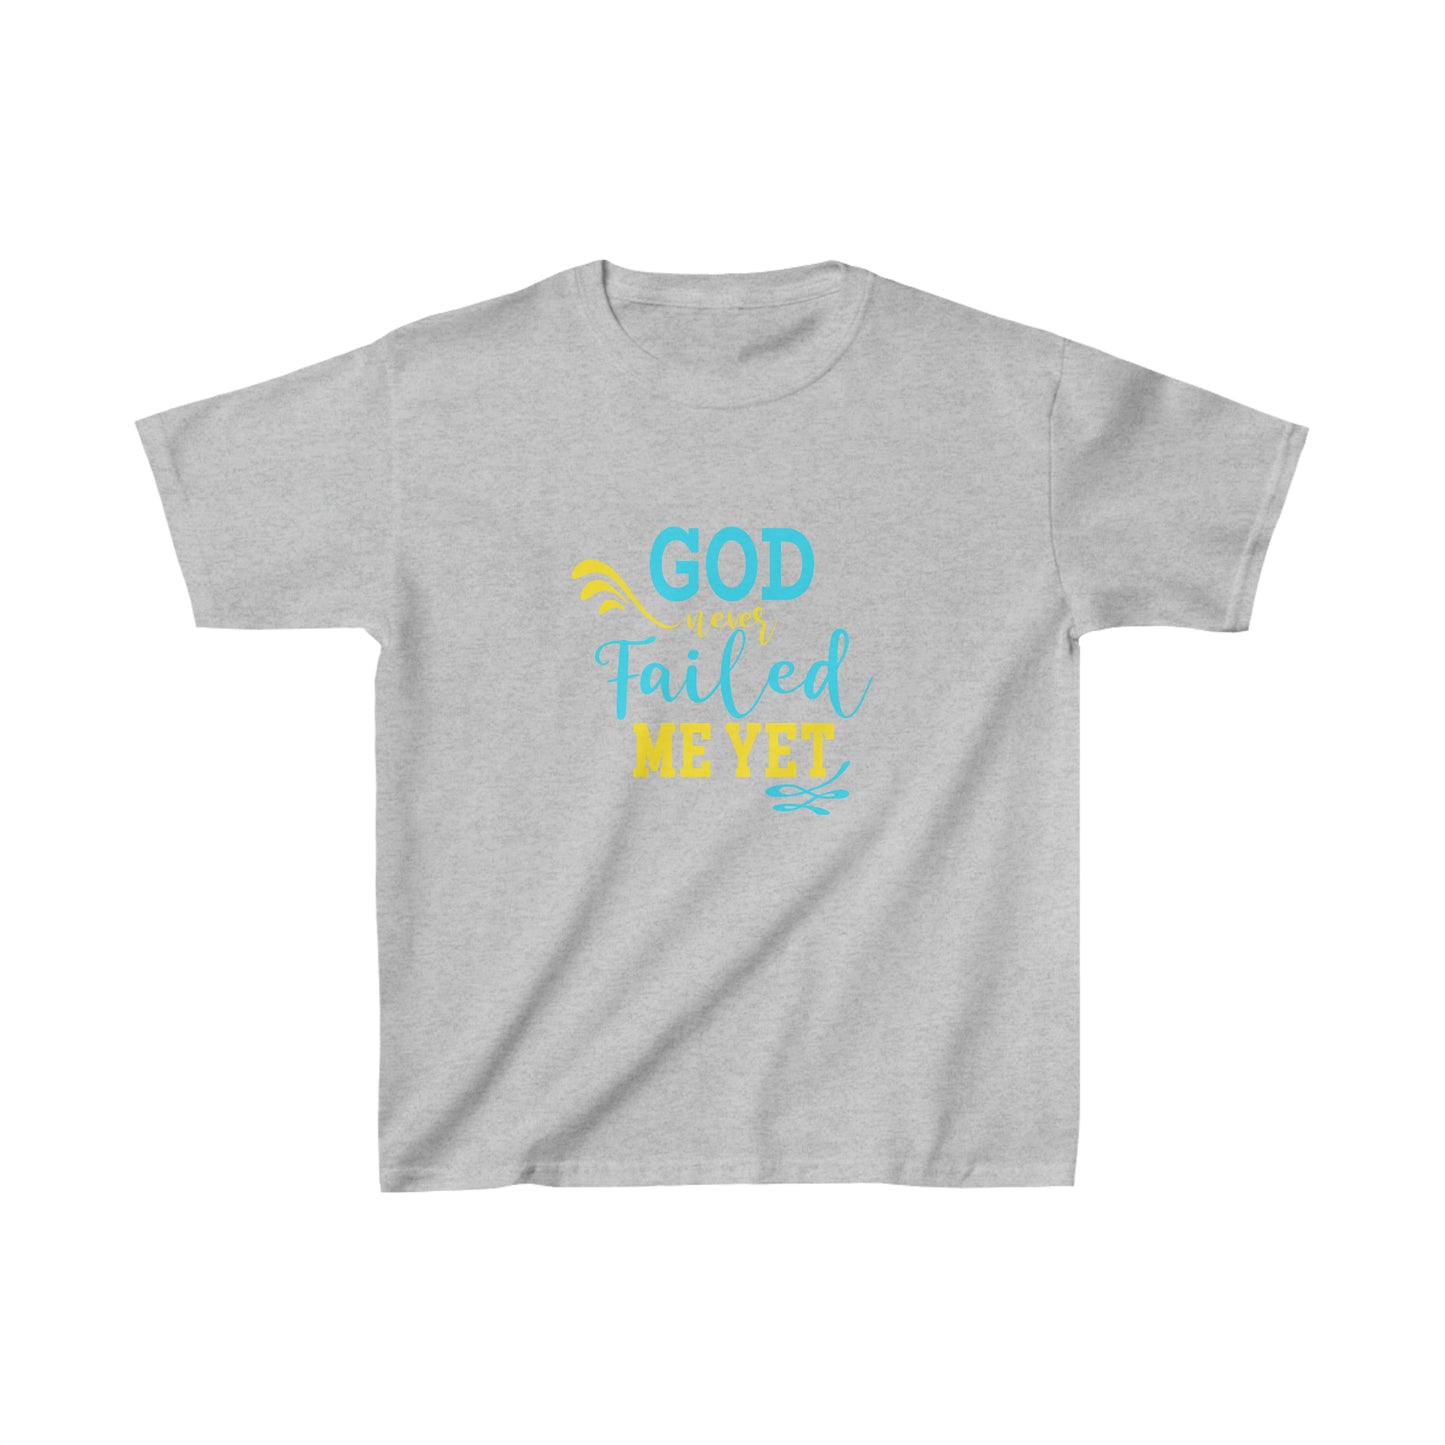 God Never Failed Me Yet Youth Christian T-Shirt Printify